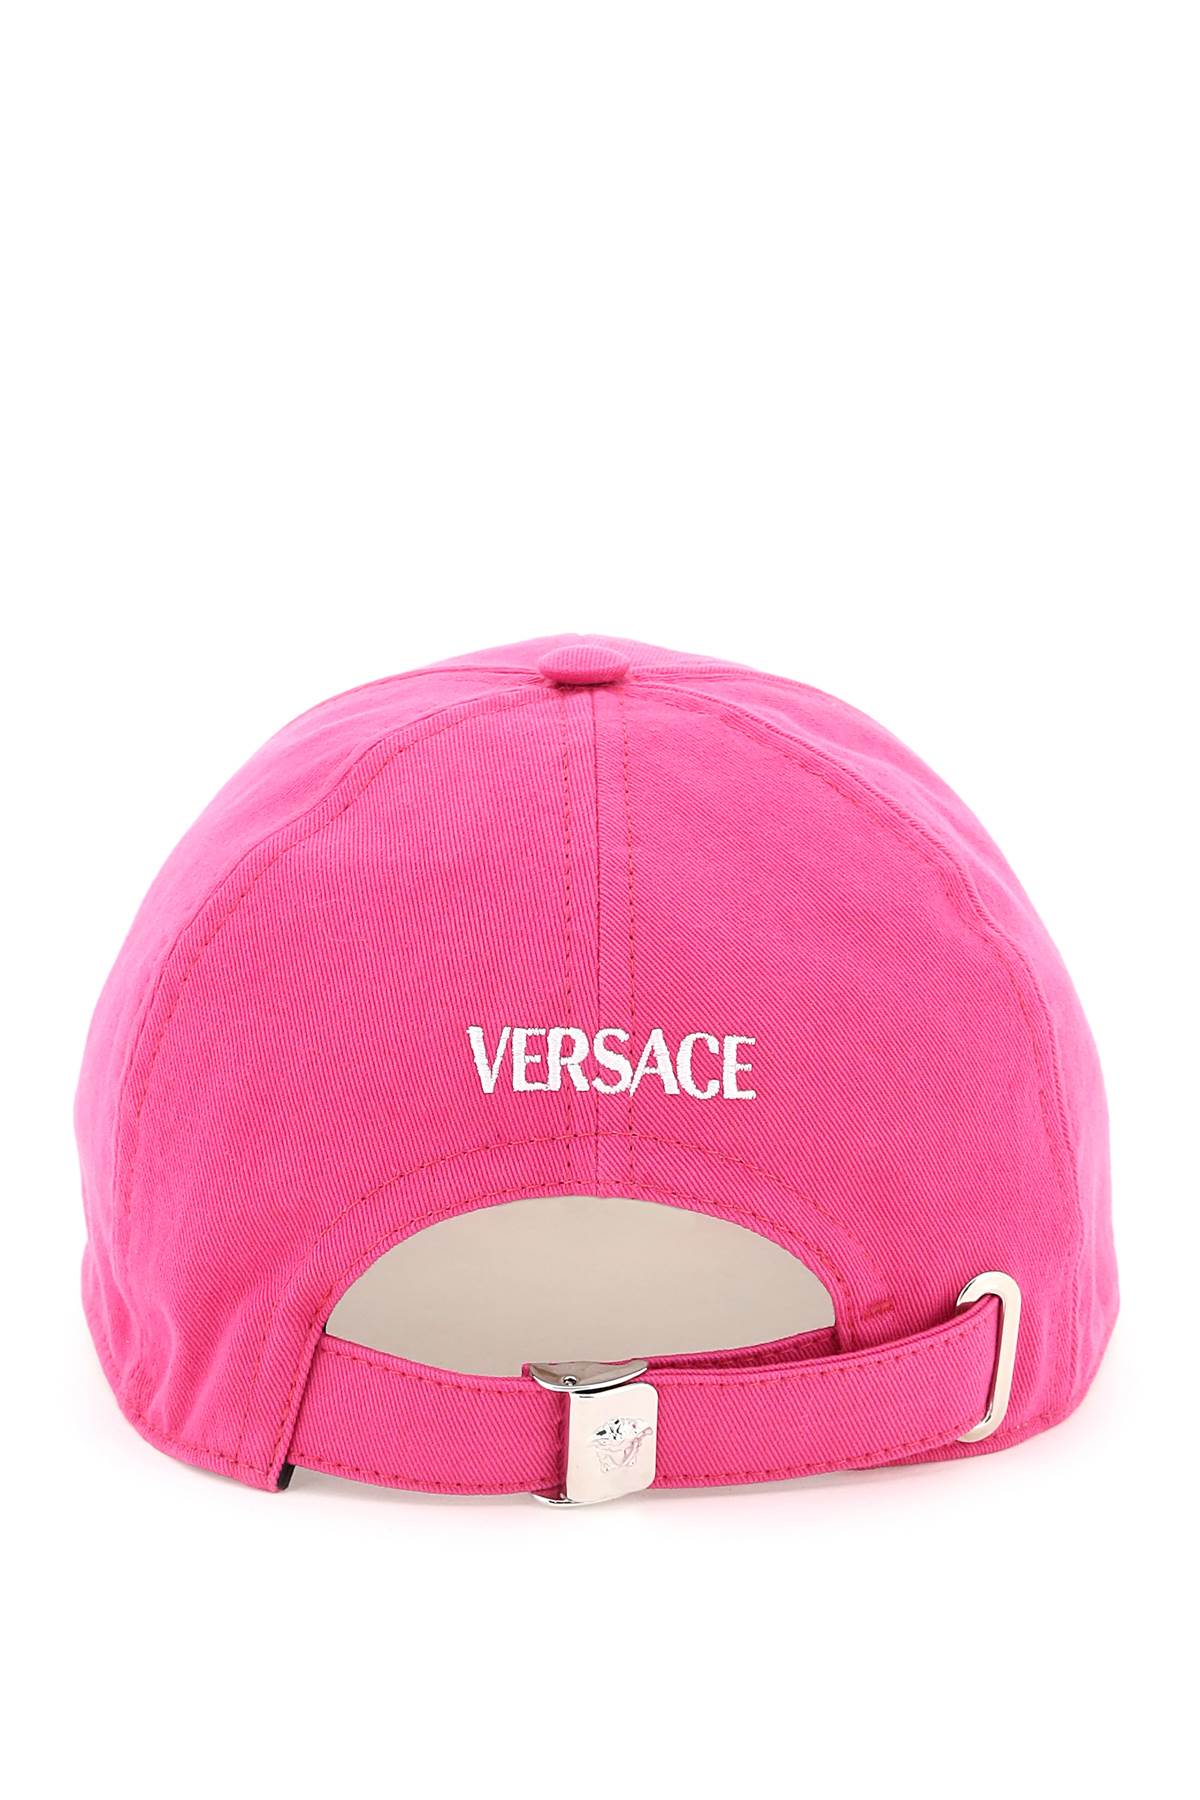 Versace Versace logo embroidery baseball cap